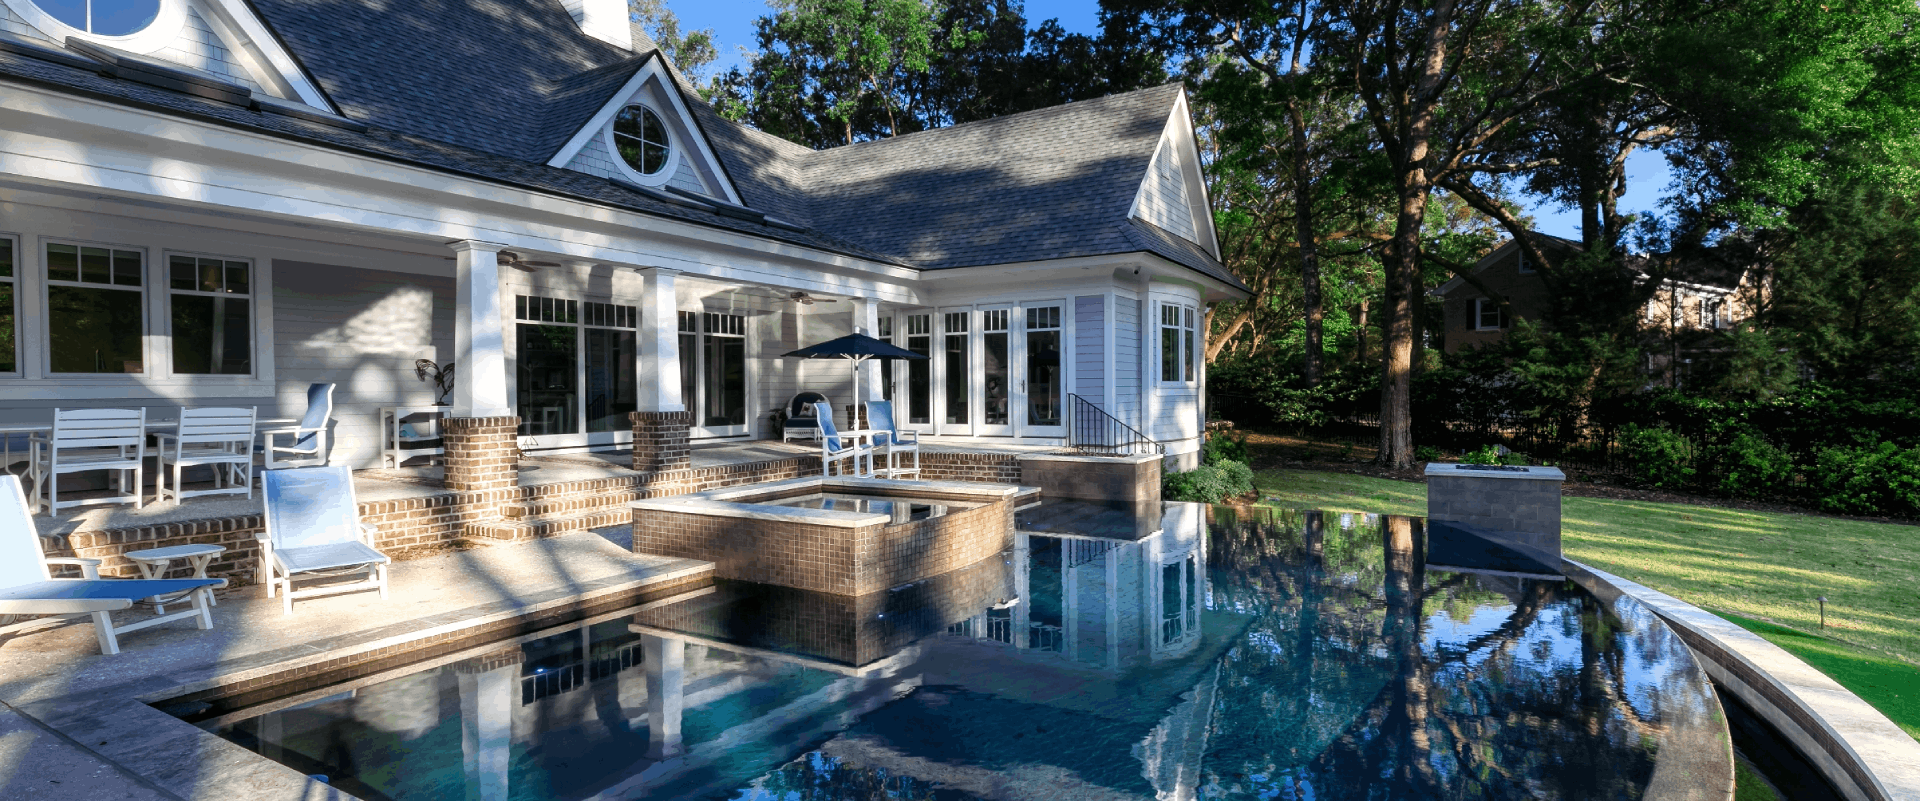 Exterior Pool